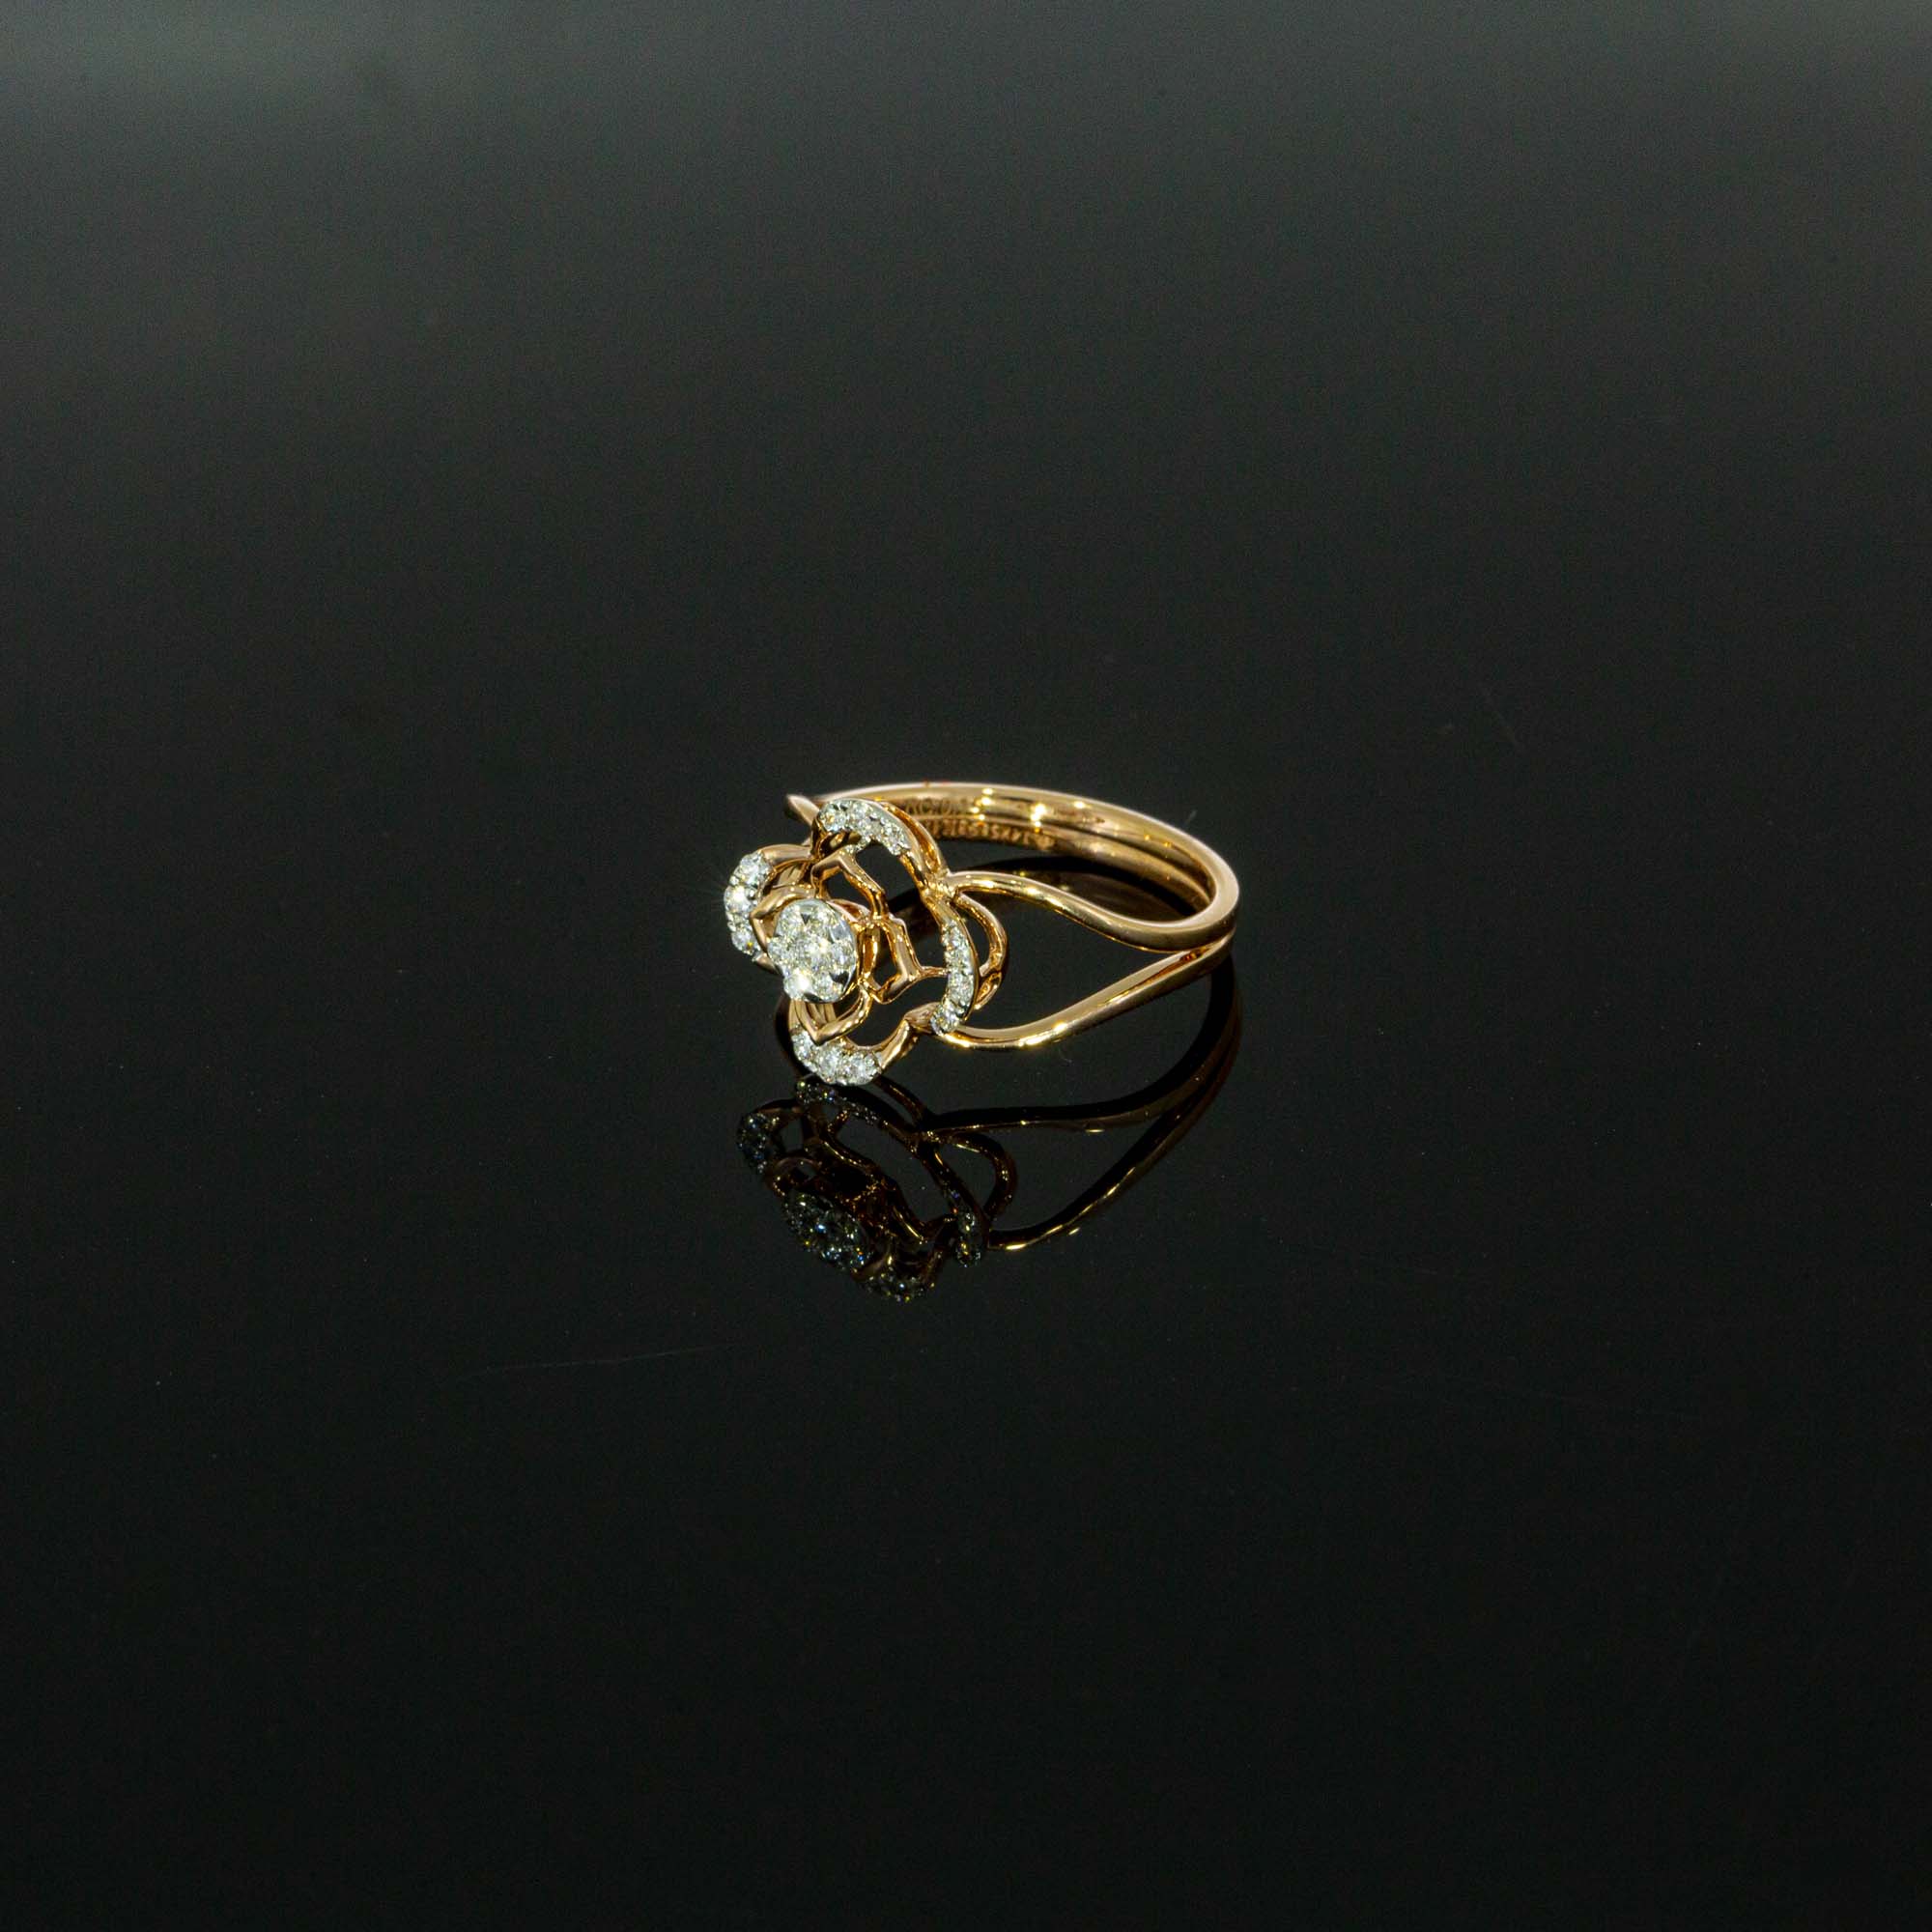 Custom Designs for Men's Diamond Rings - Indy Facets